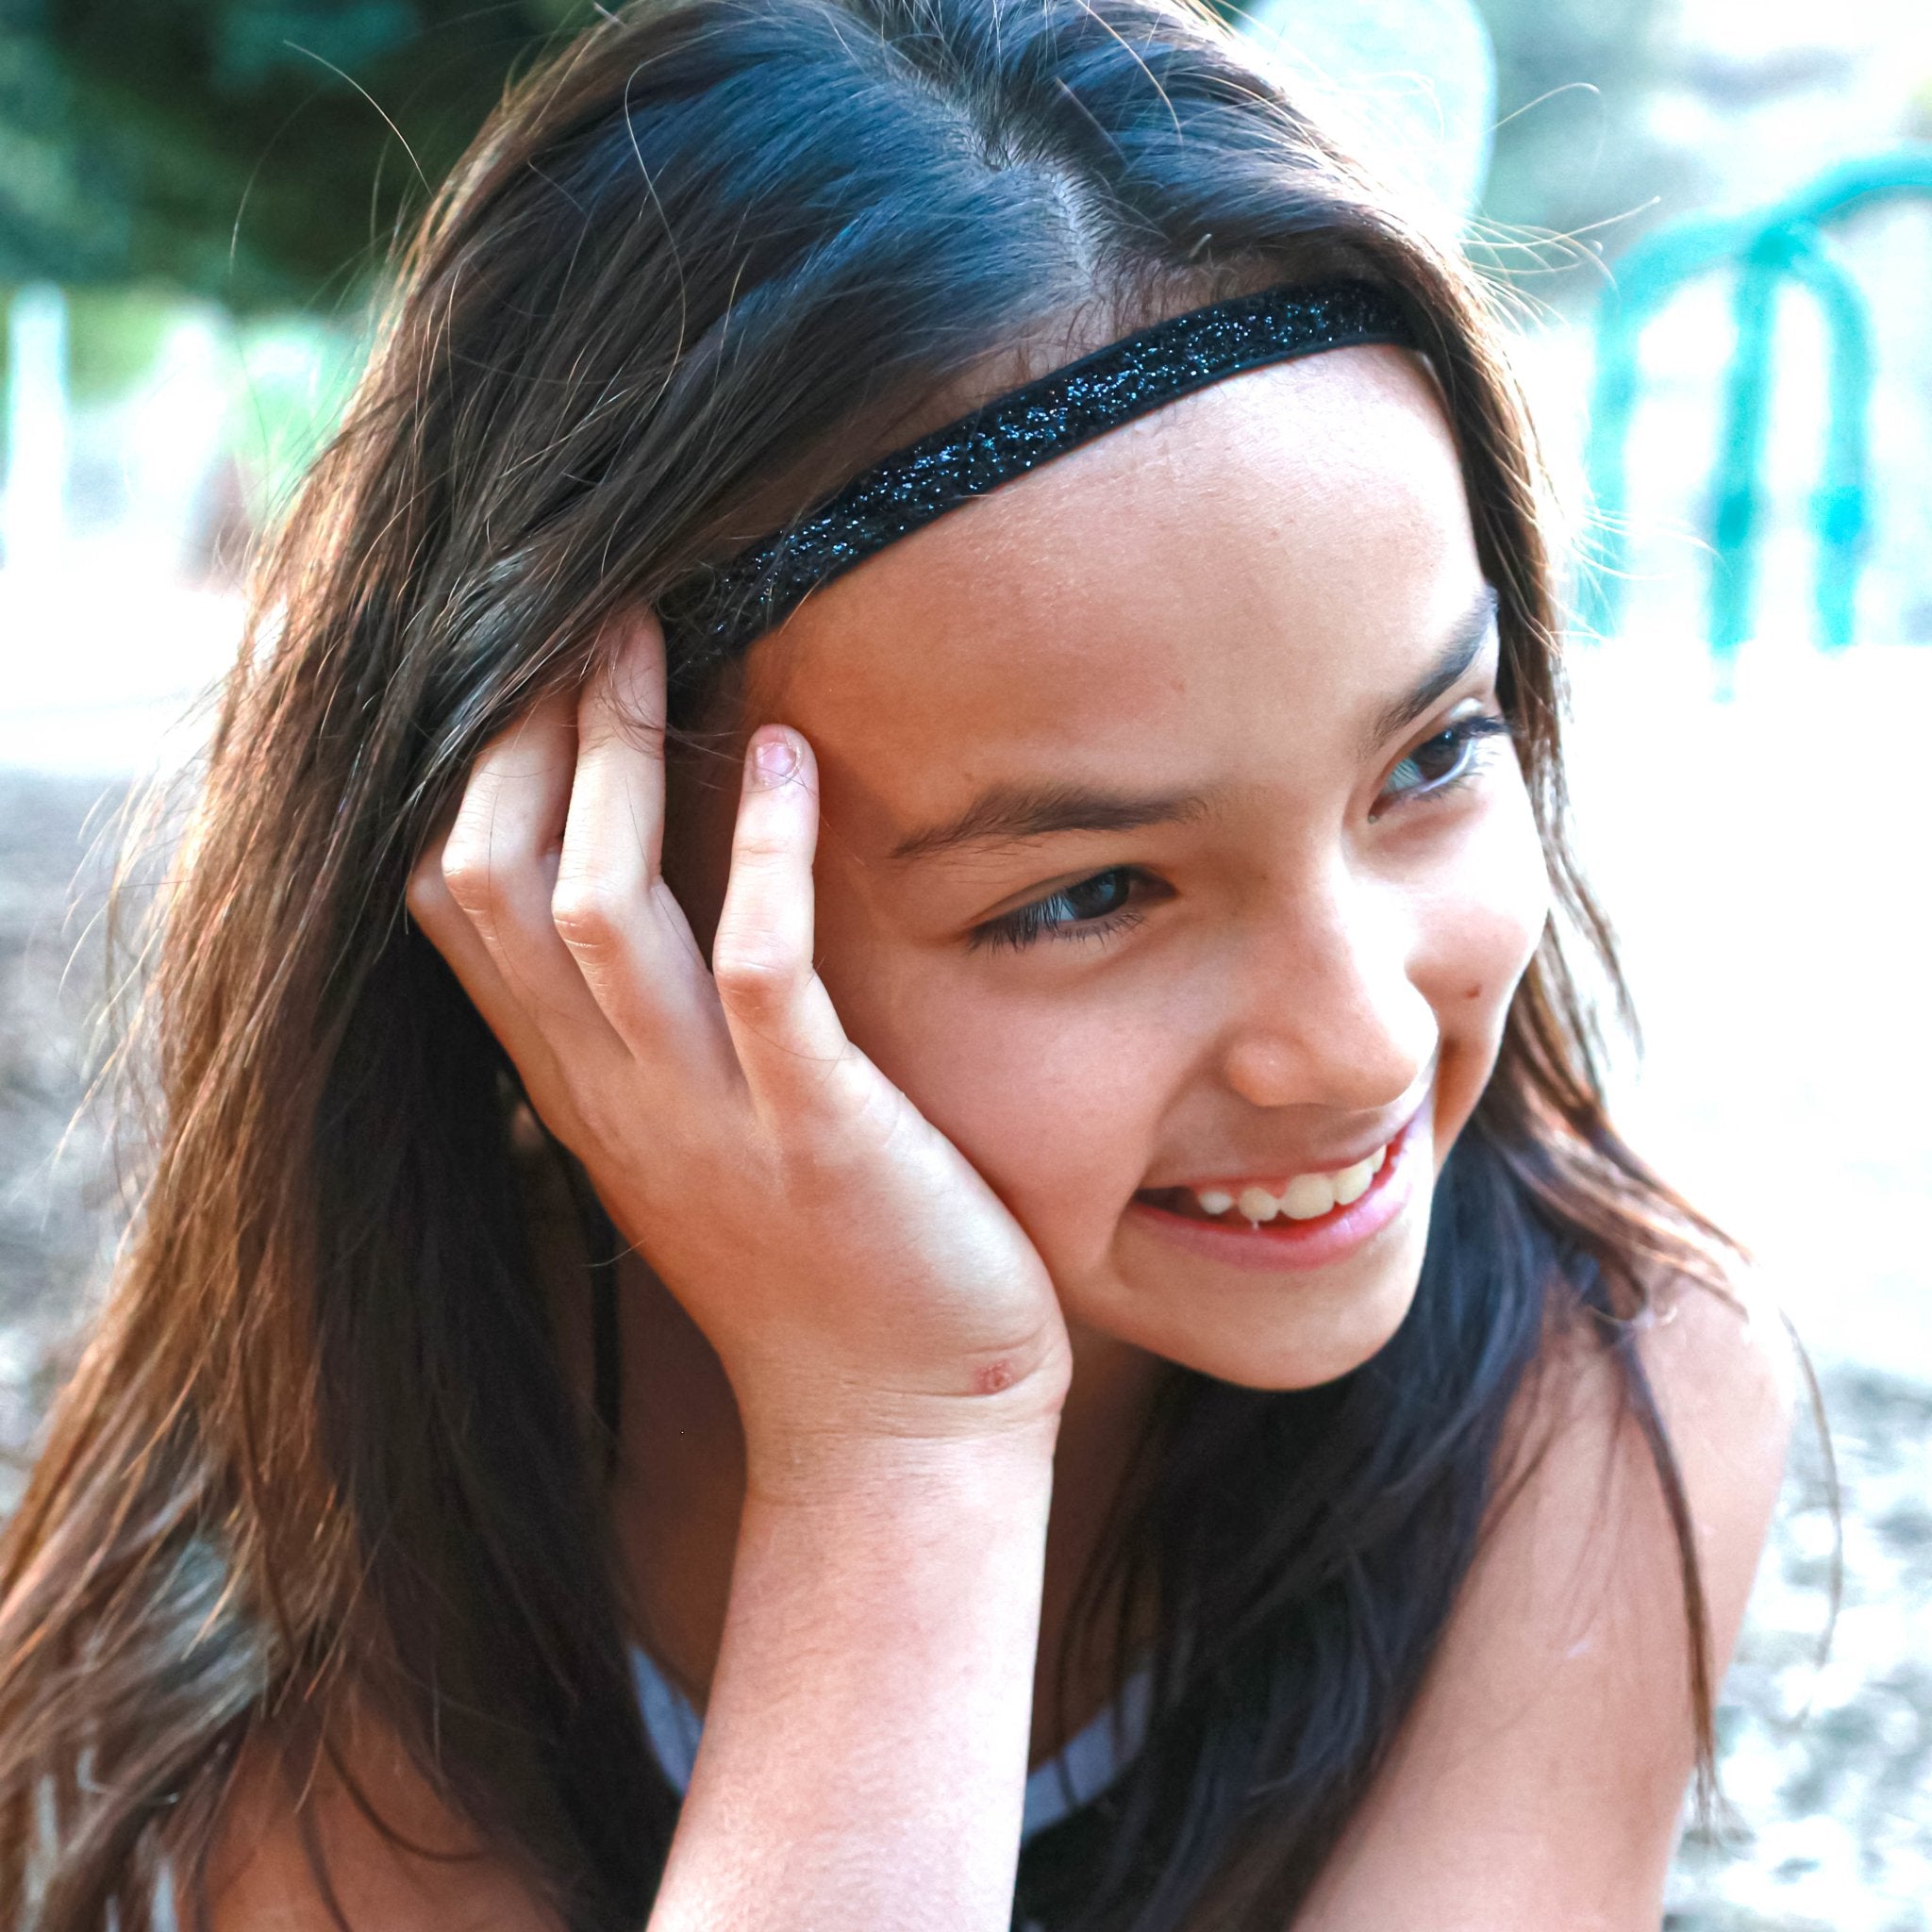 6 Pcs Adjustable Thin Glitter Headbands for Girls